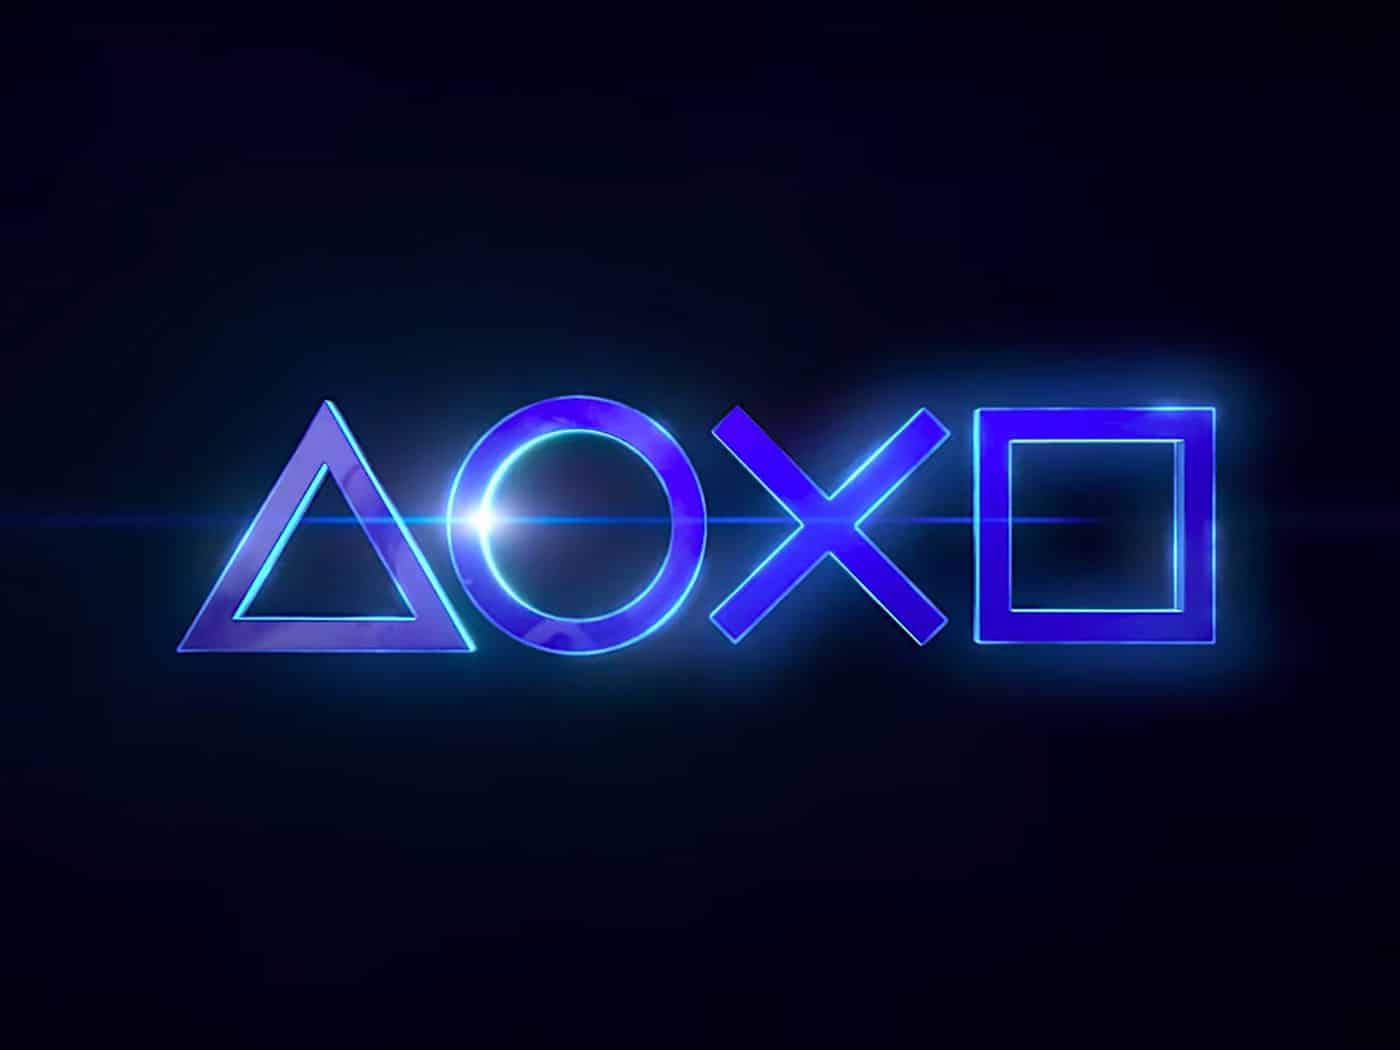 PlayStation Studios logo